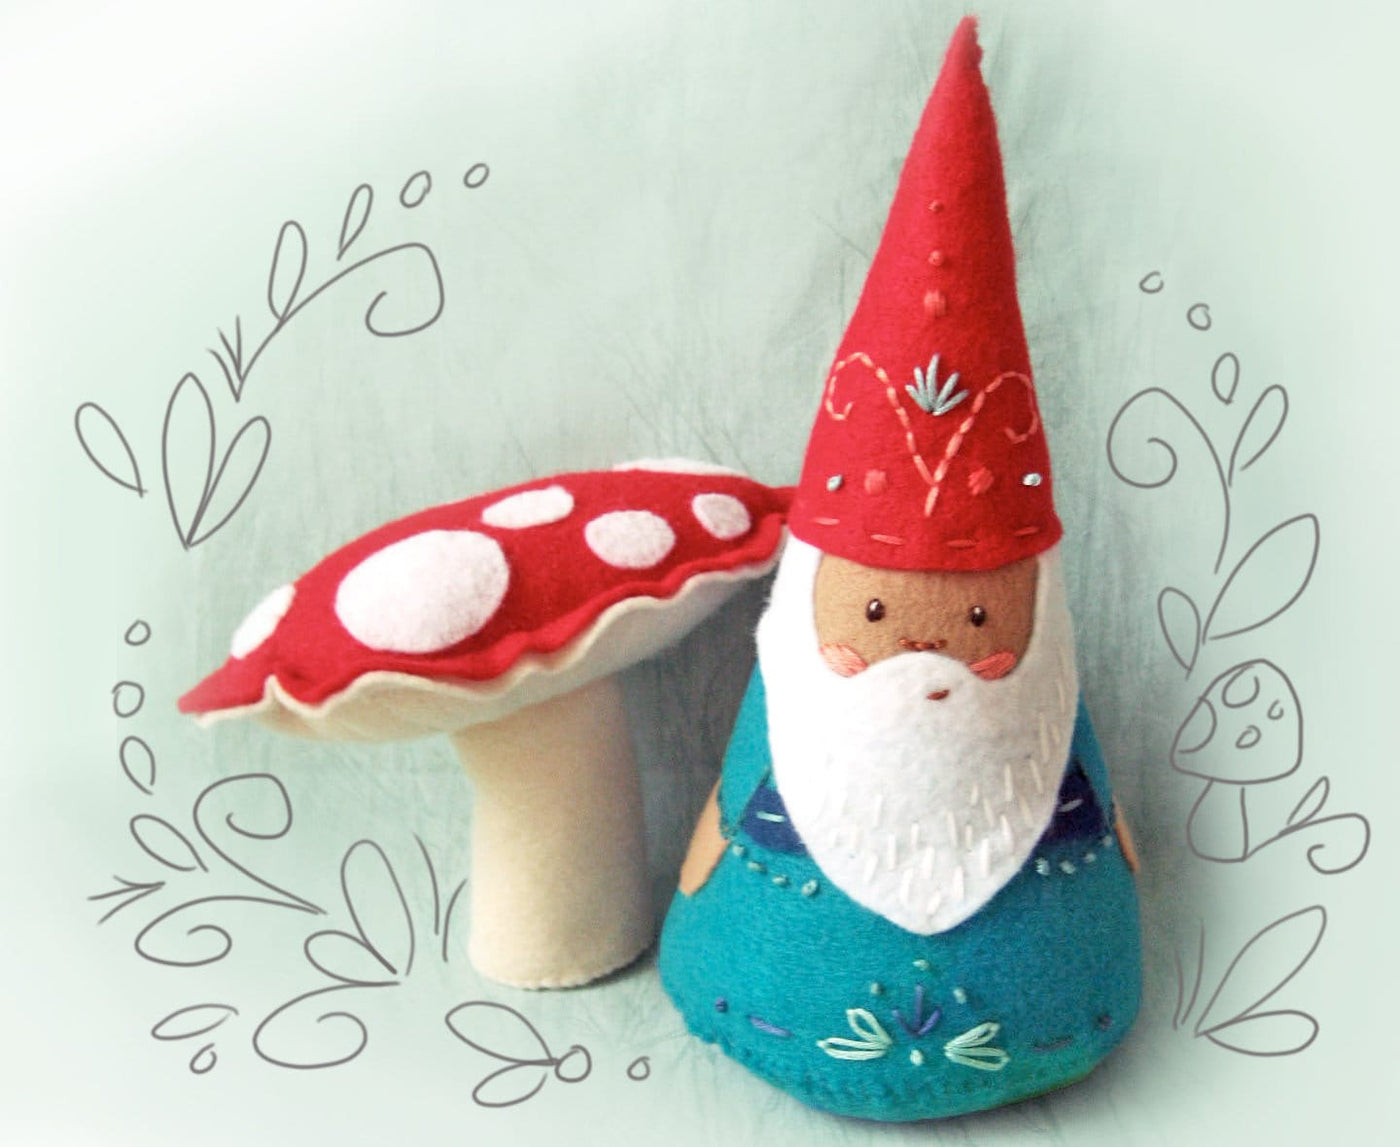 Sewing Kit Mushroom Gnome — Notions Sewing Studio